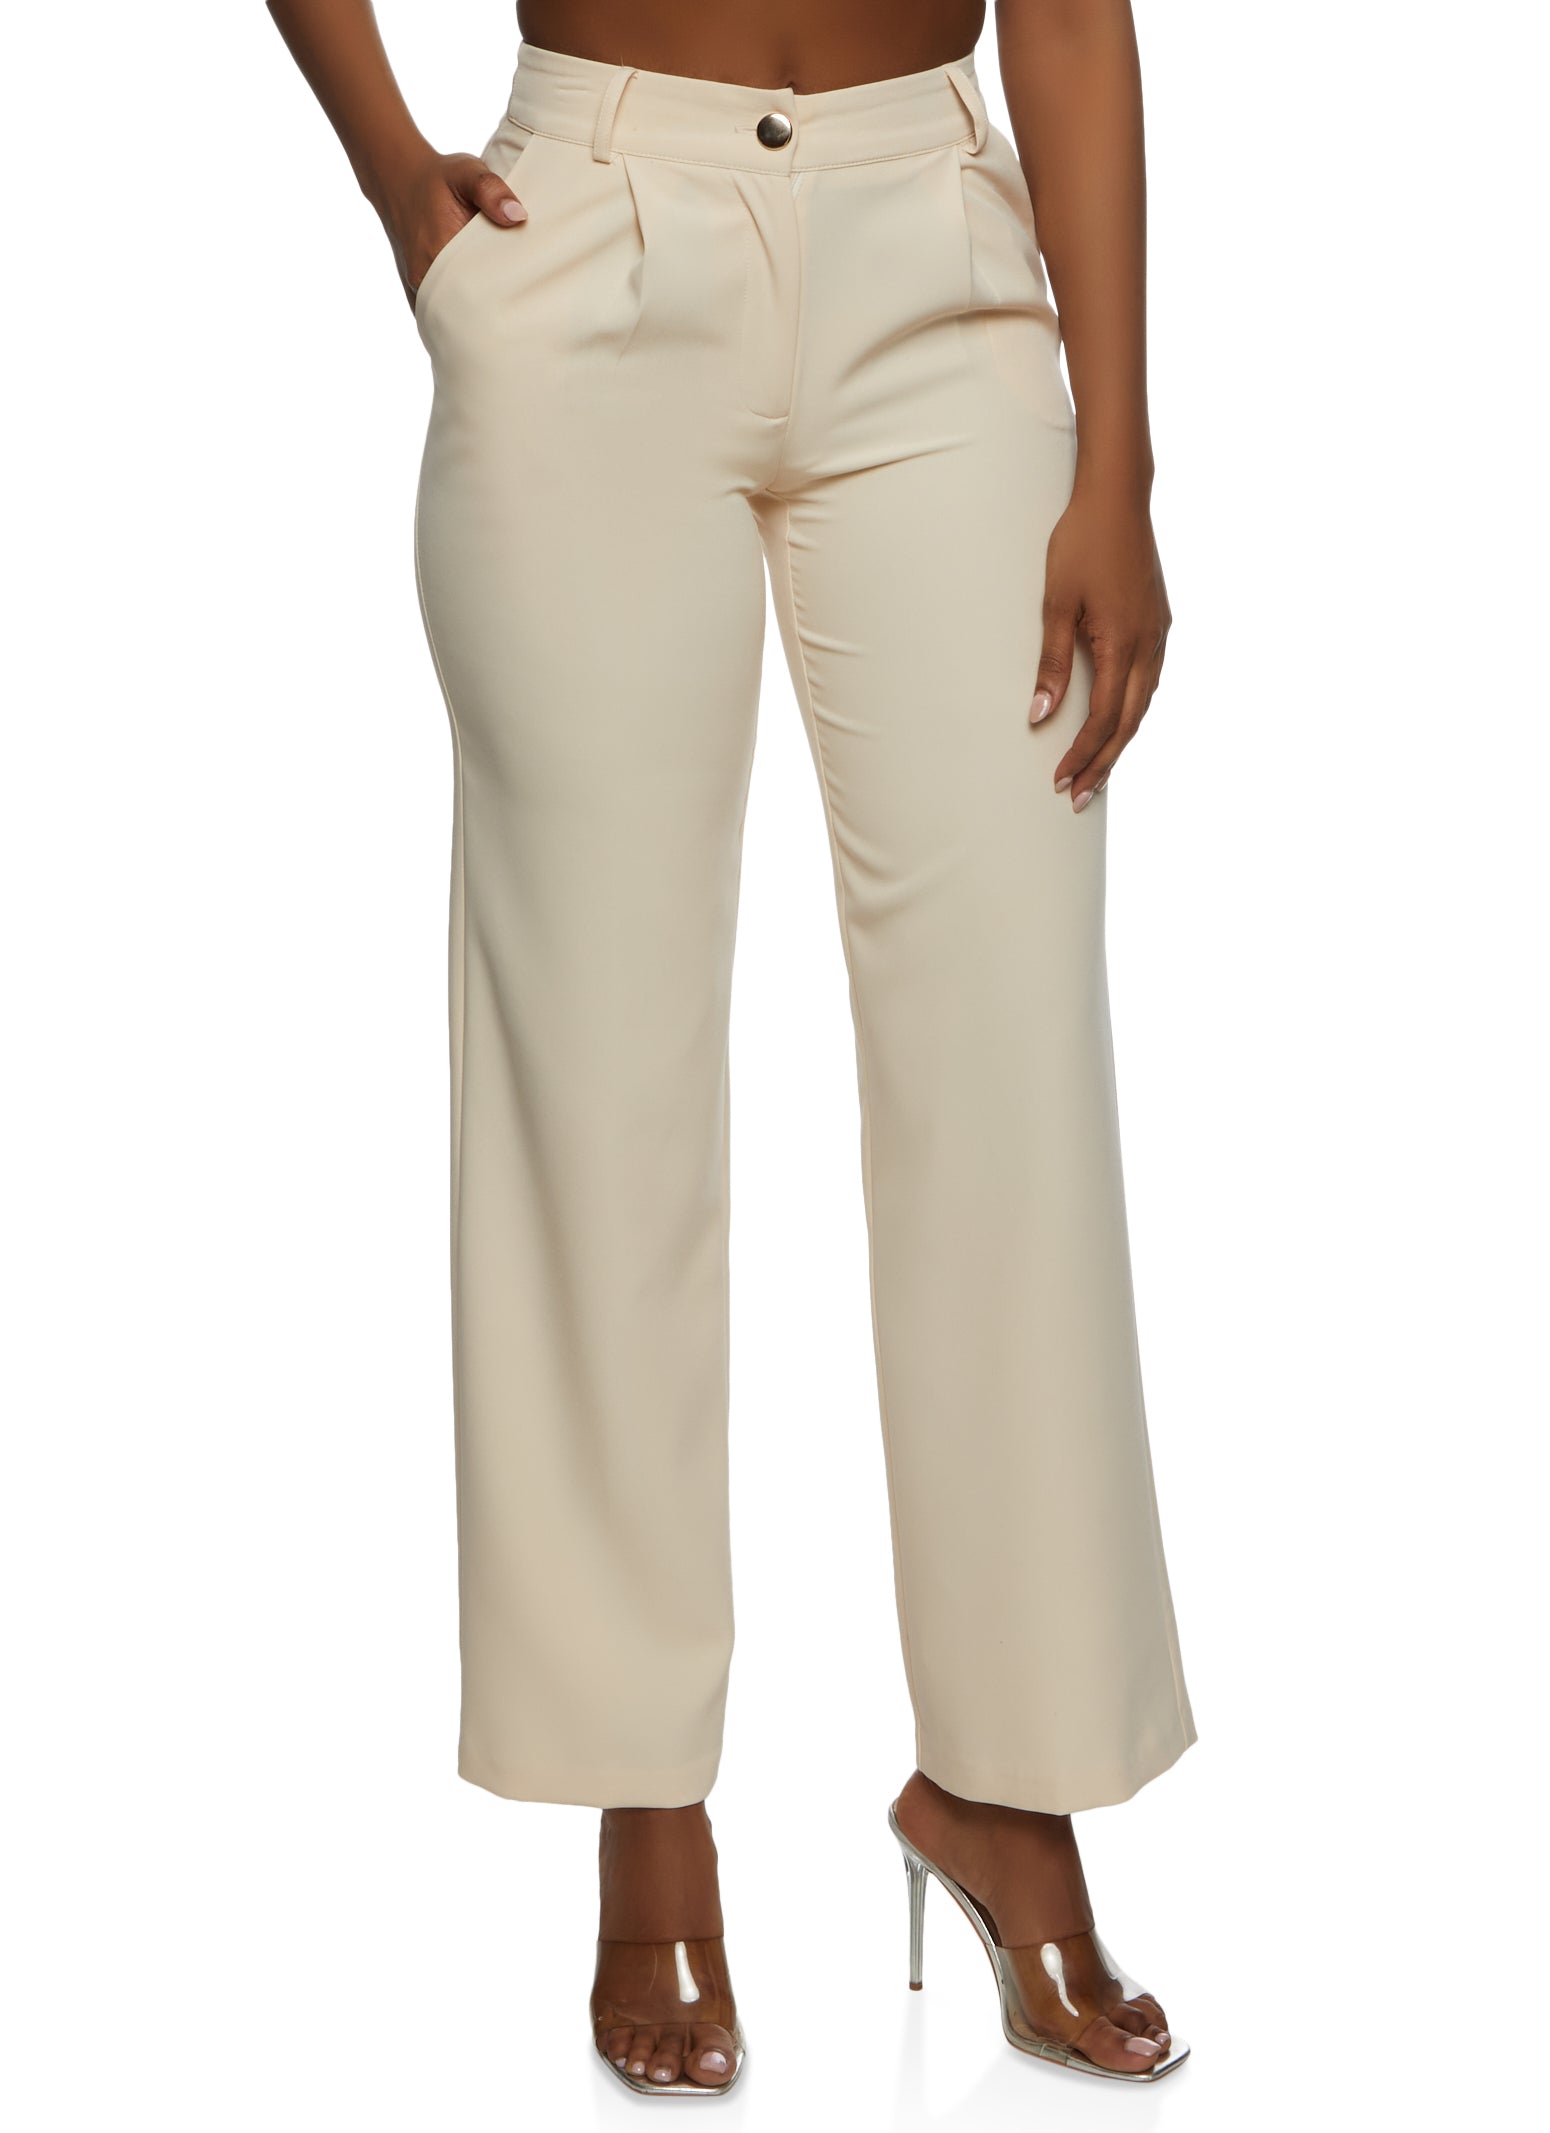 GuGsi Women's Cargo Capris Pants Slim Fit Drawstring Fl-ap Pocket Tie Knot  Hem Cropped Solid Color Pant (Khaki, M) women's khaki pants harem pants for  women low rise pants for women black